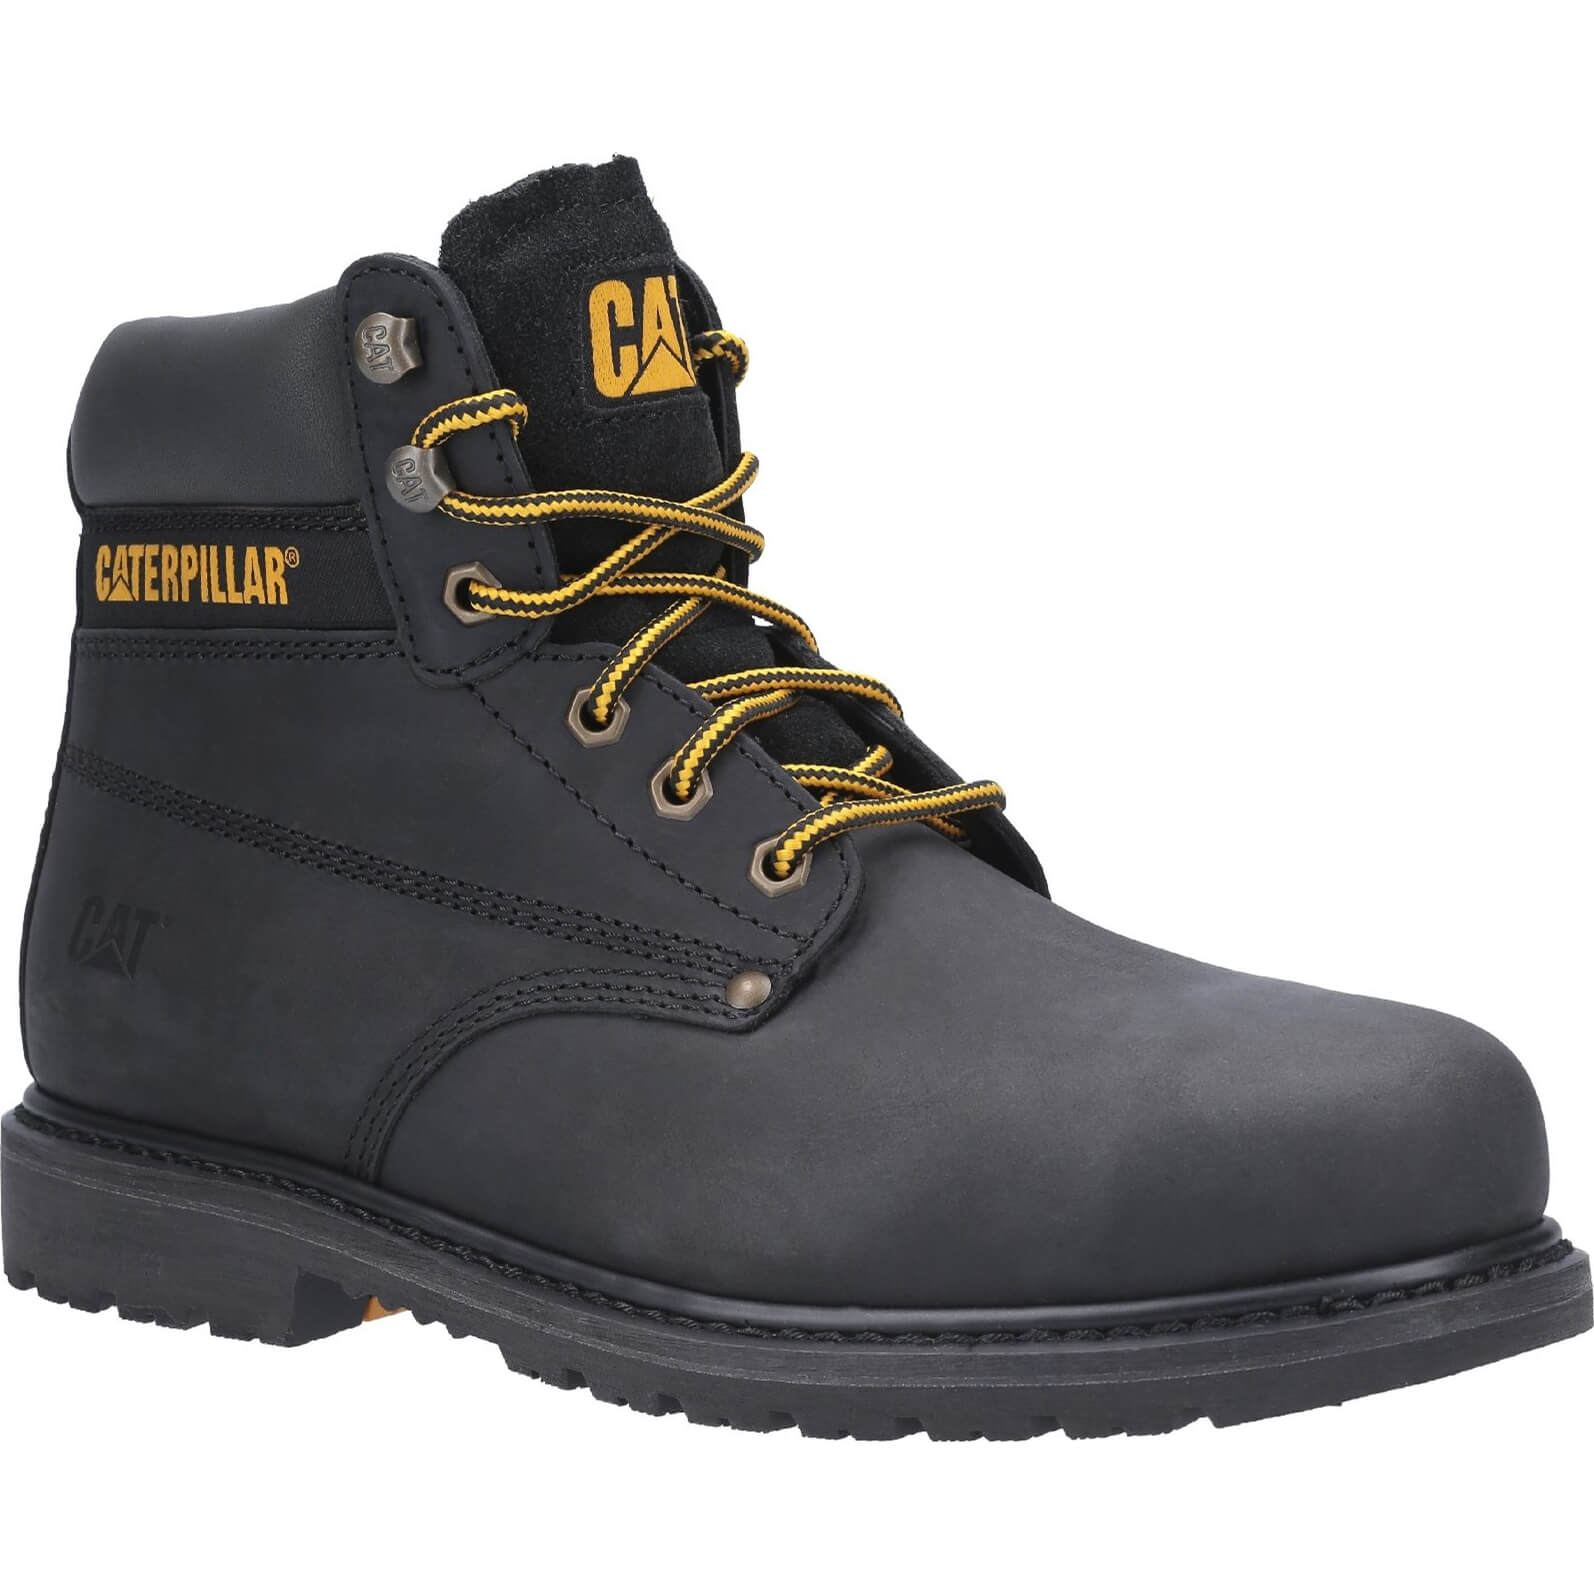 Caterpillar Powerplant GYW Safety Boot Black Size 8